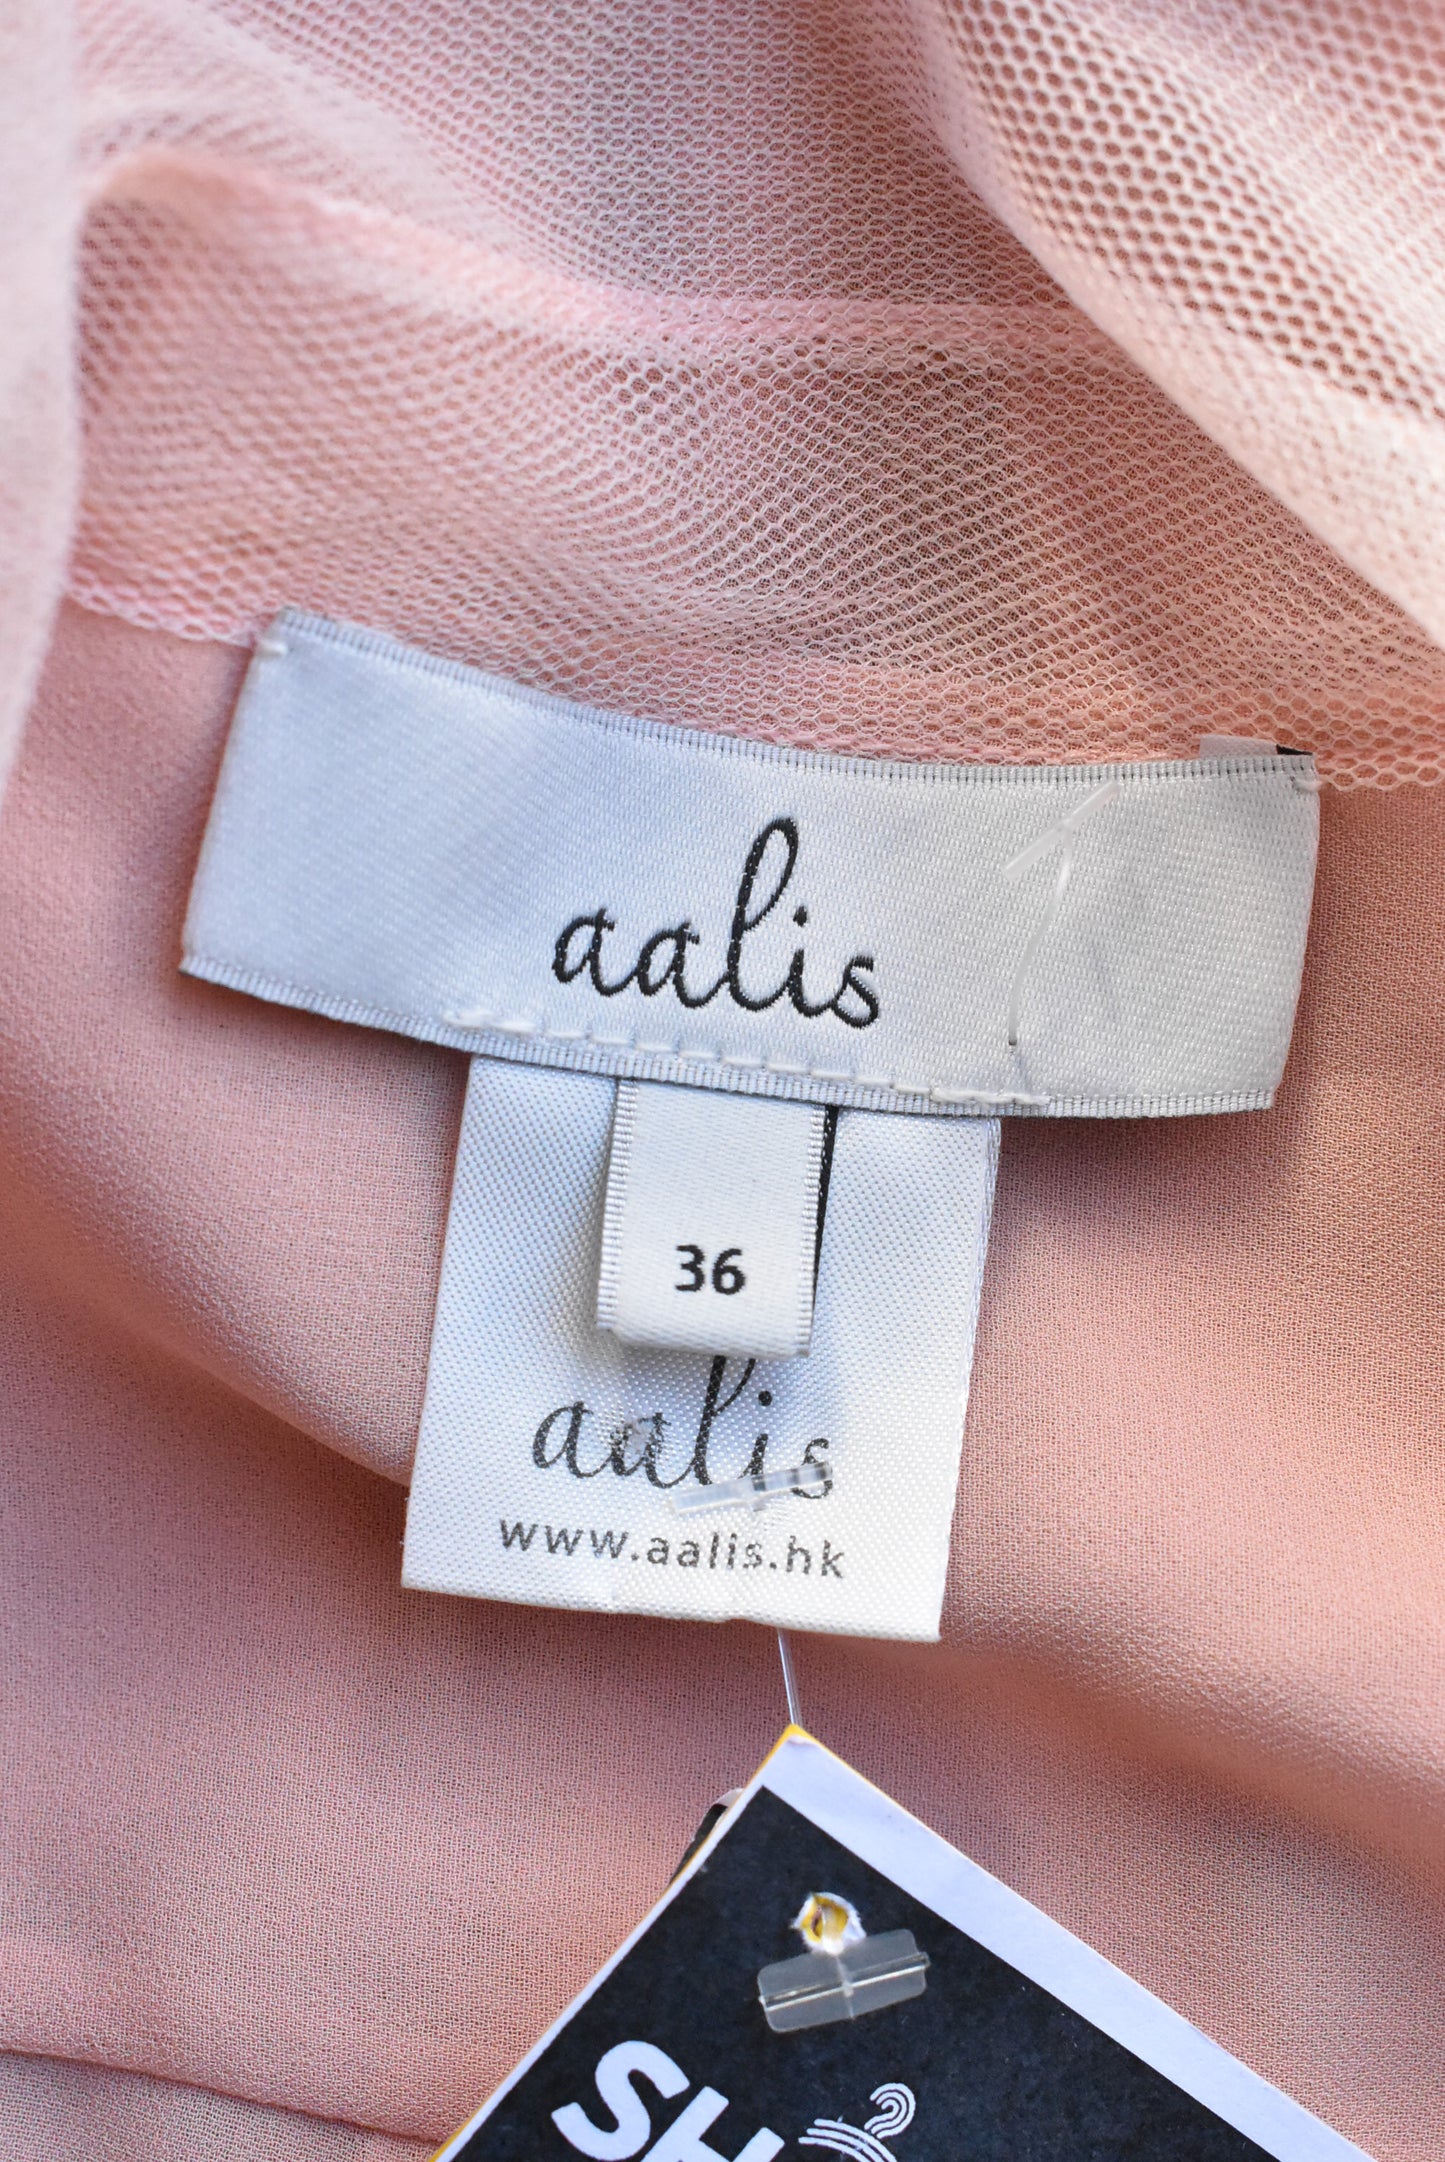 Aalis peach chiffon blouse, 36